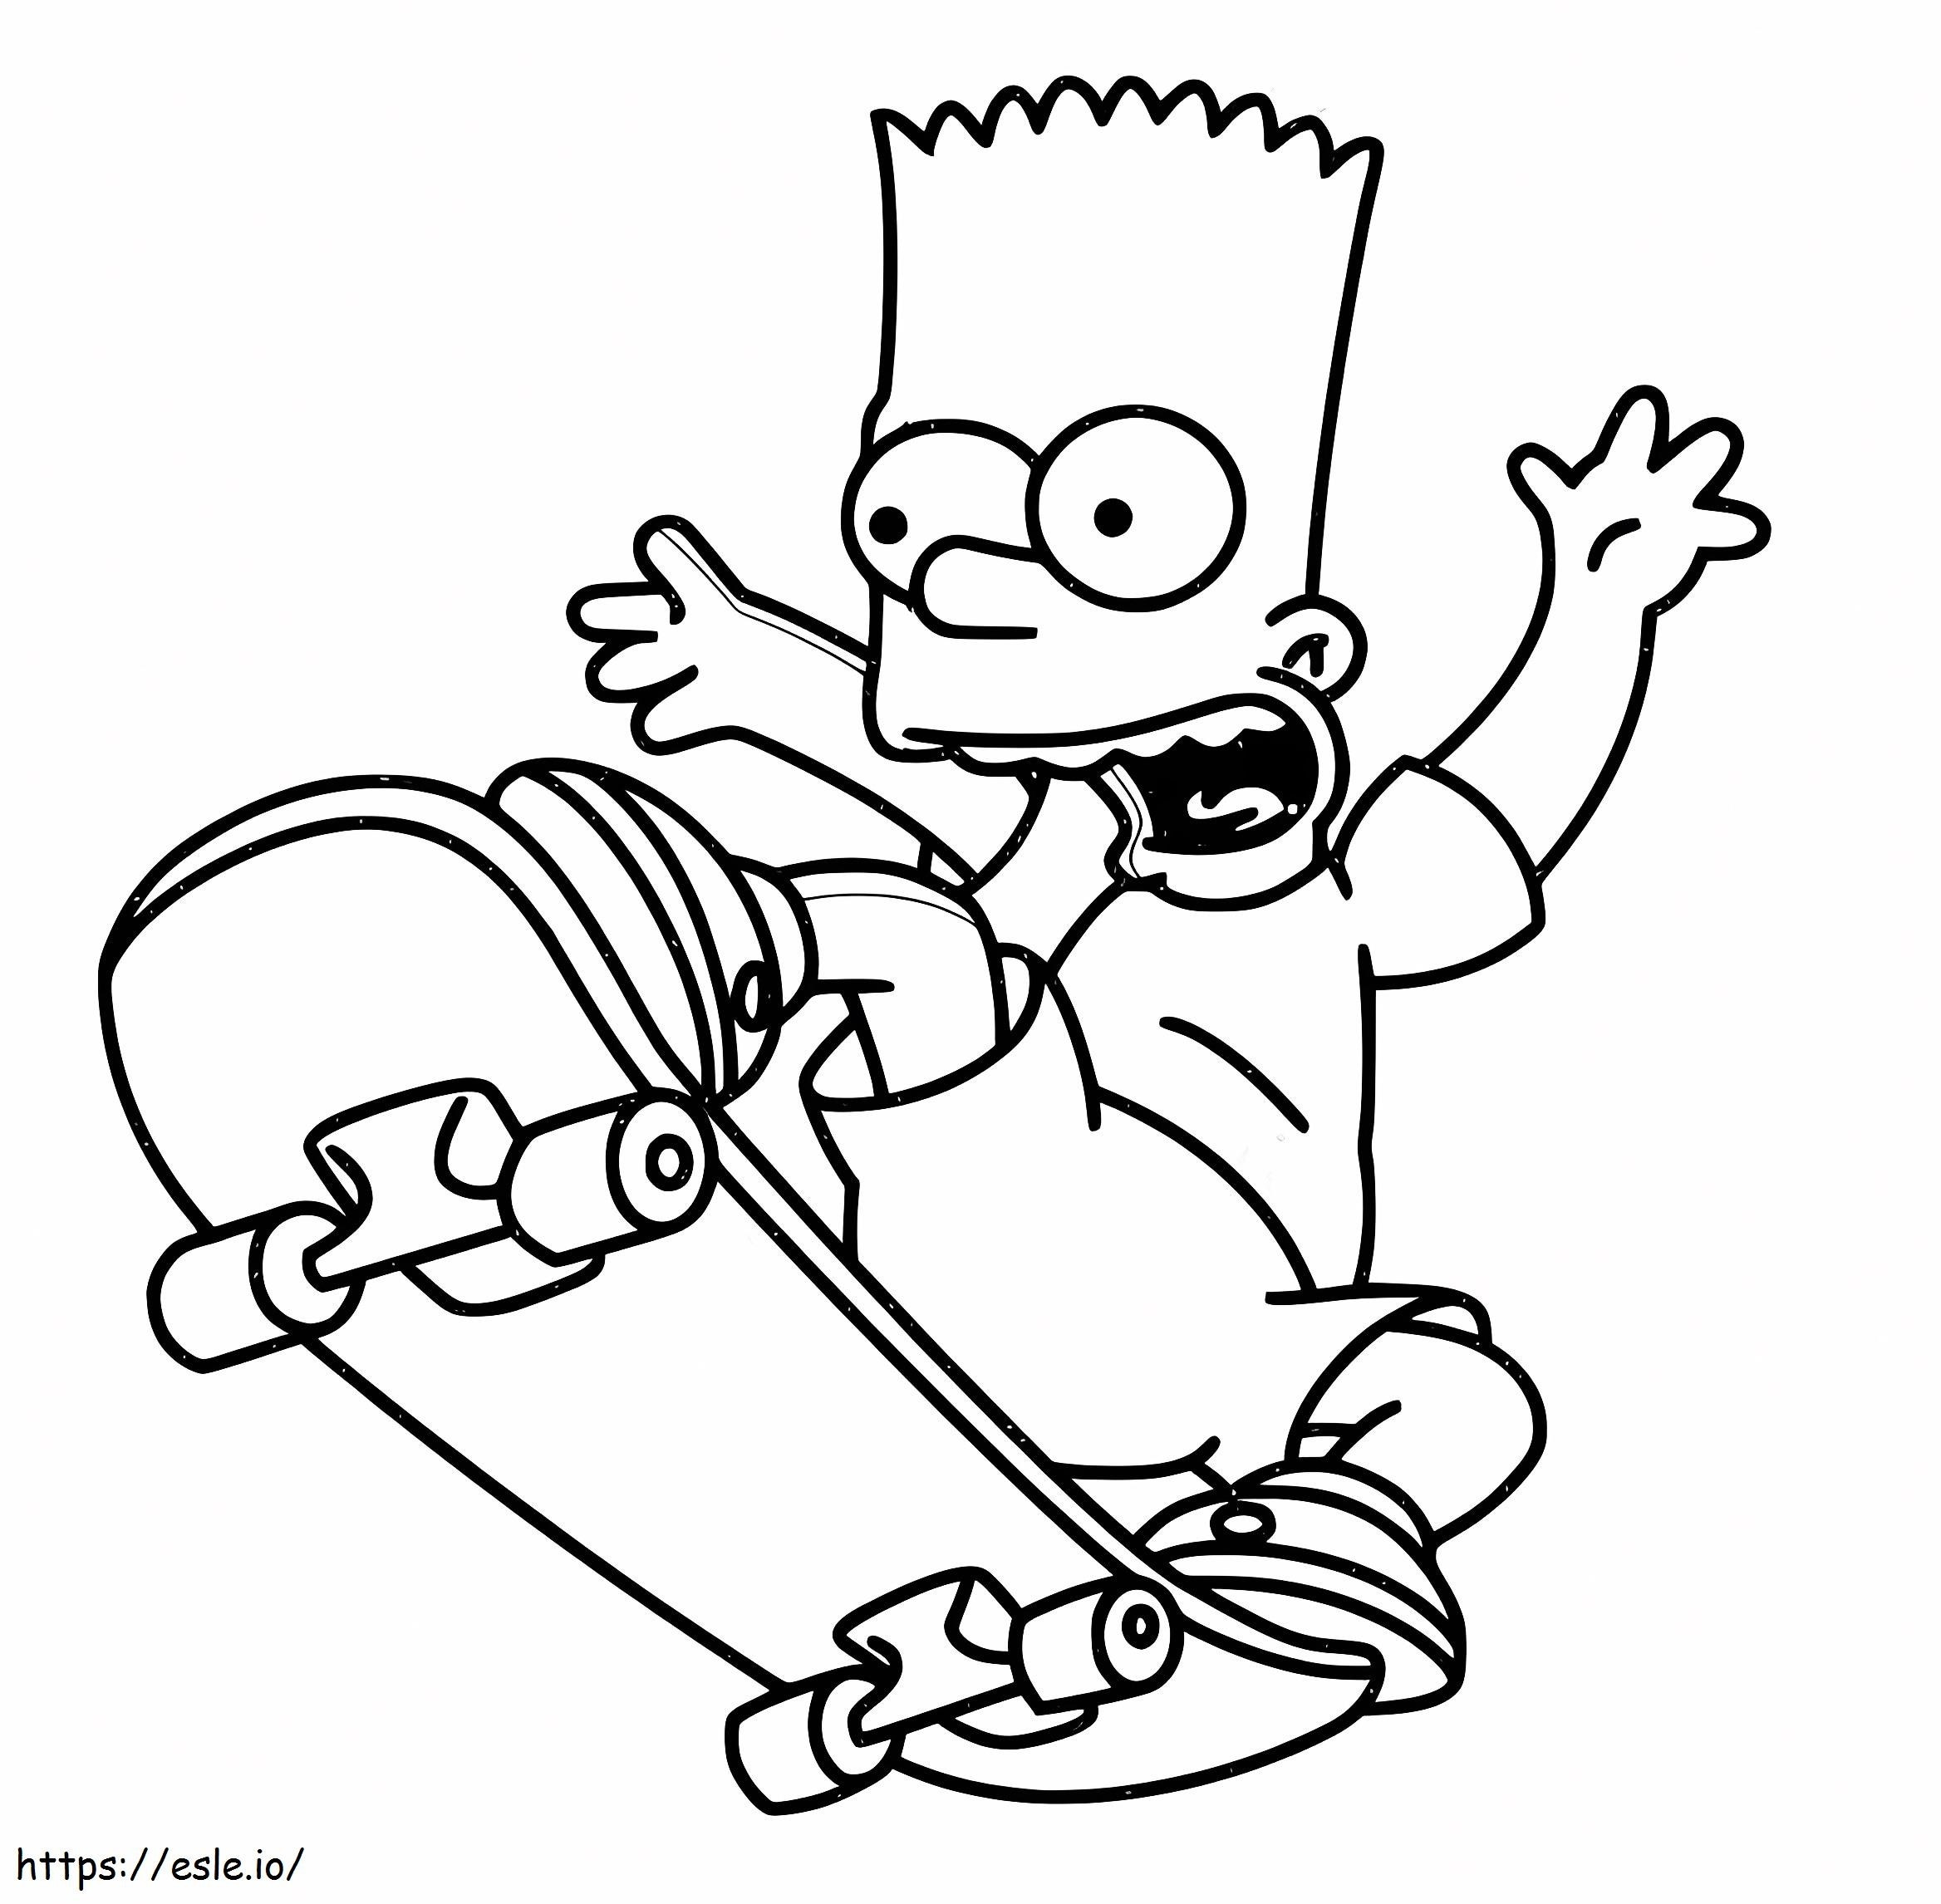 1532400701 Bart Simpson Skateboarding A4 da colorare